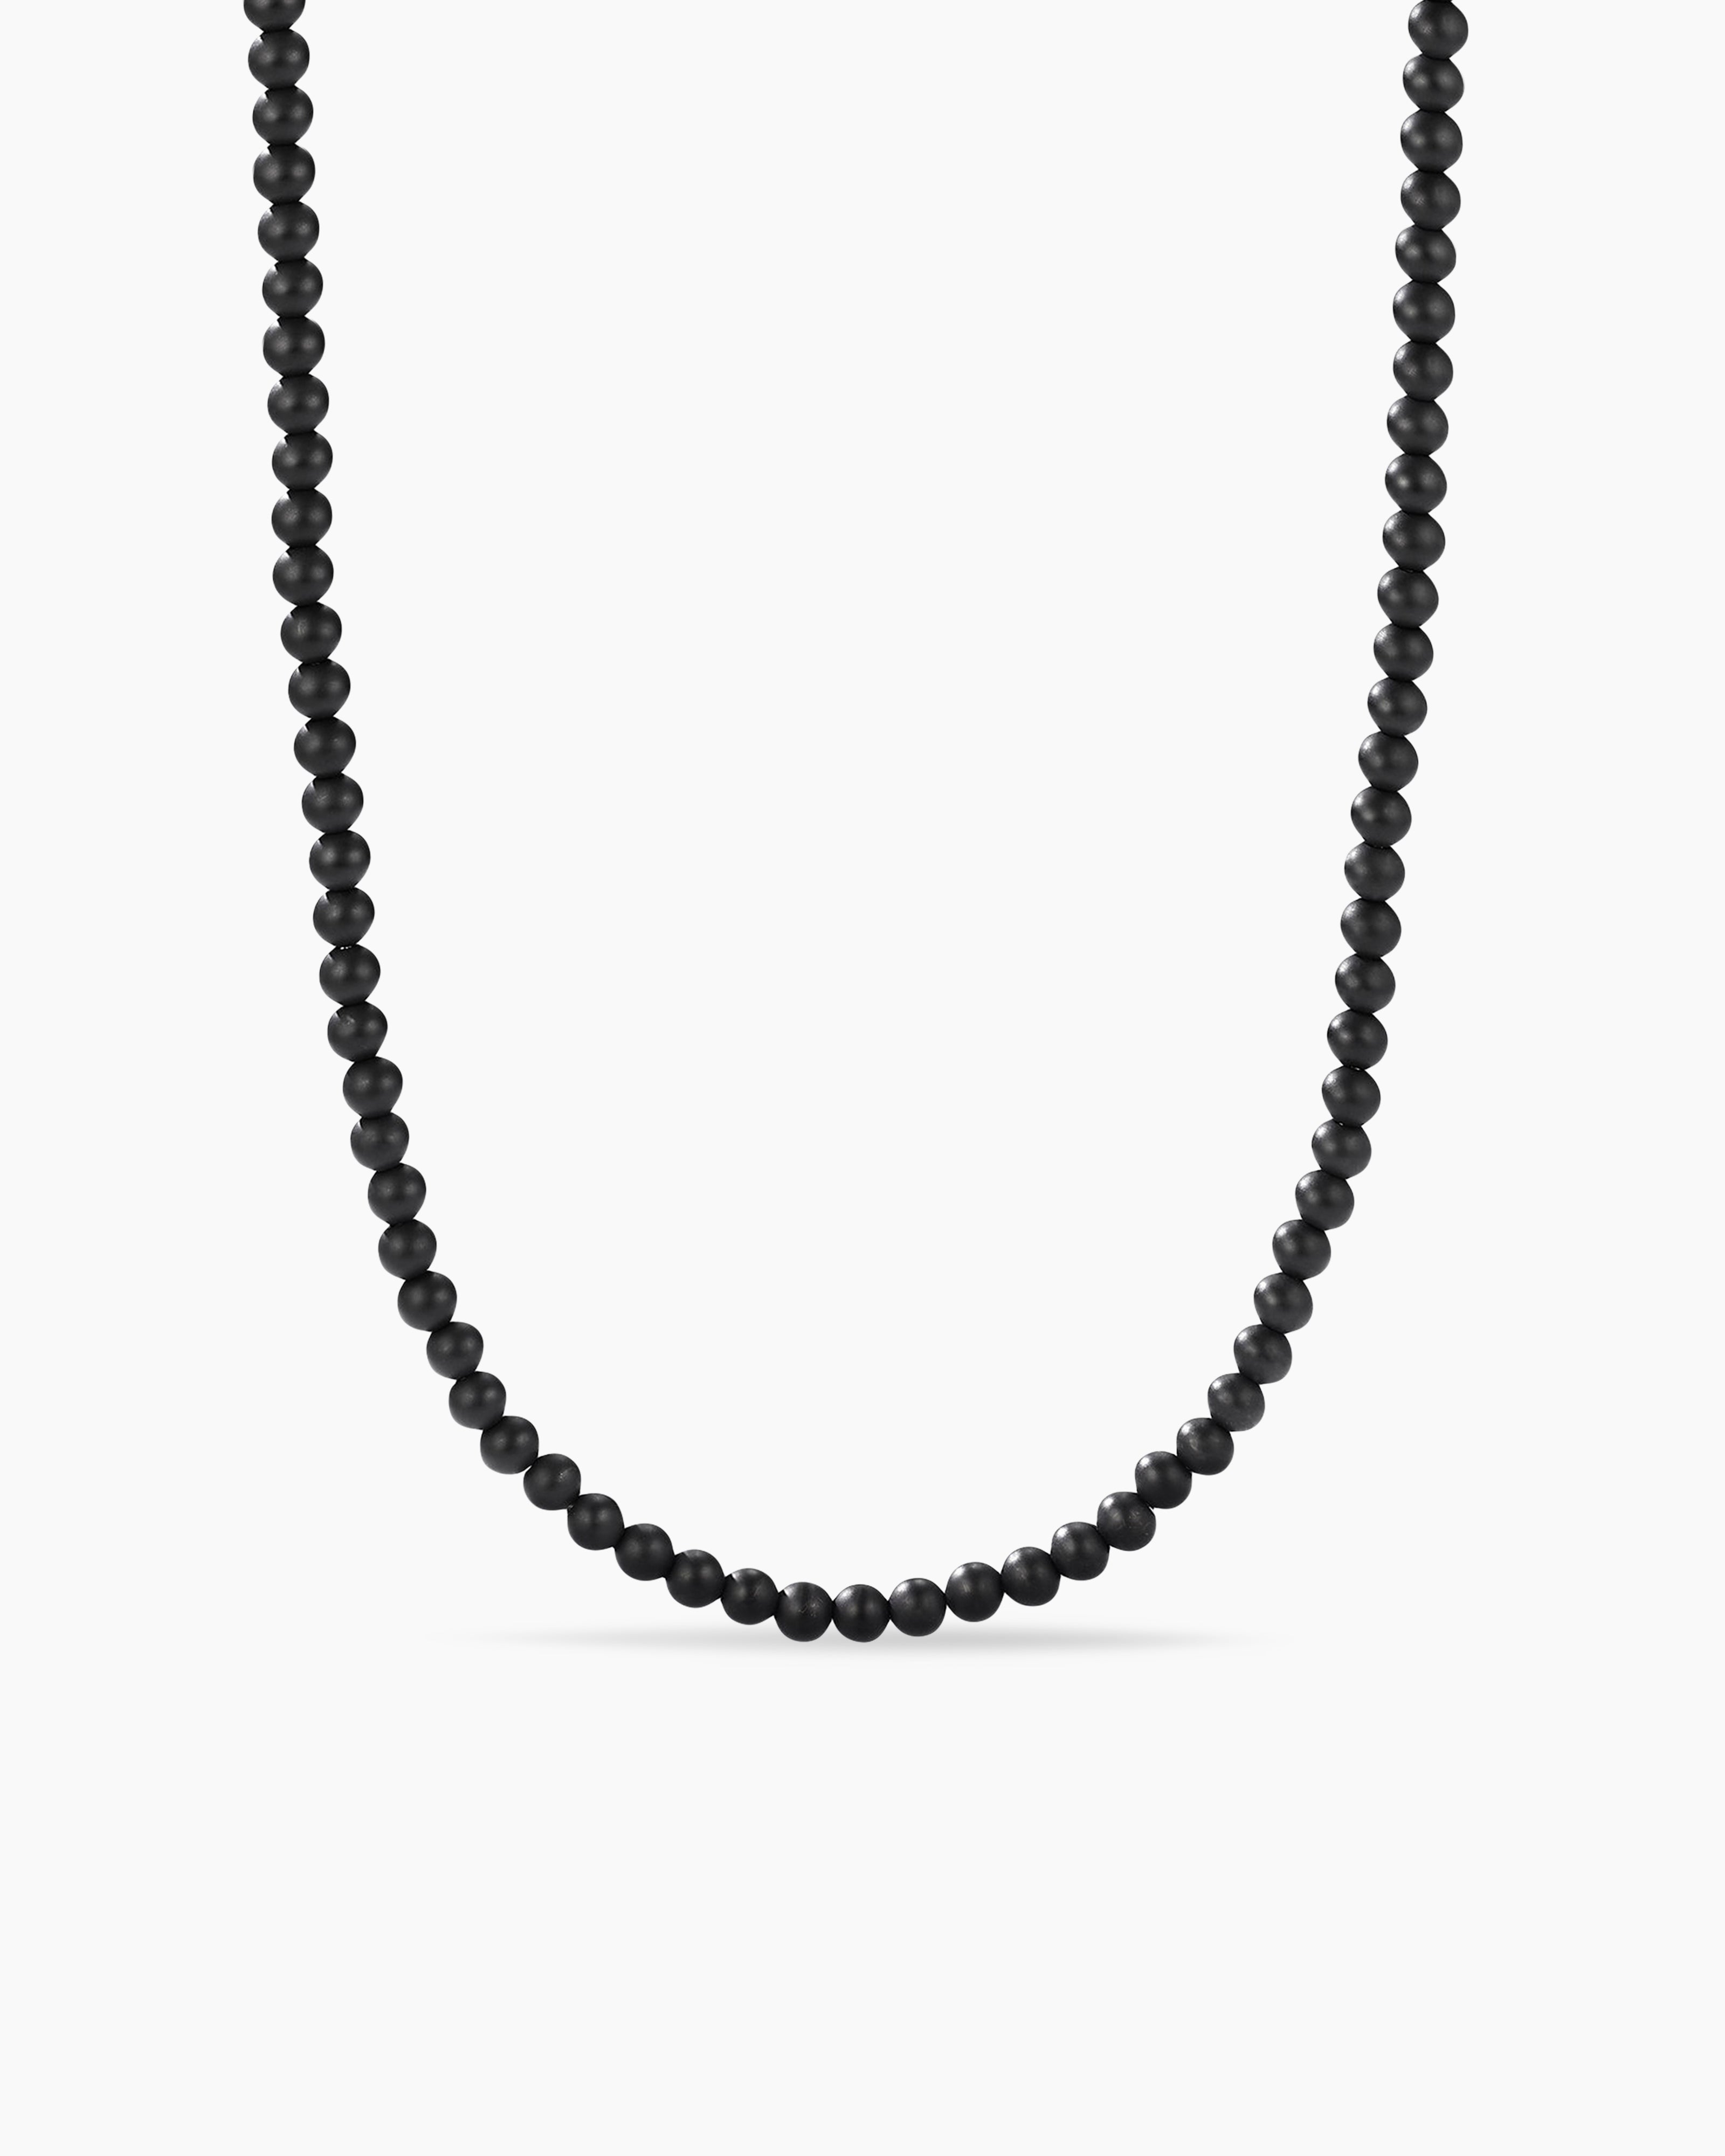 David Yurman Spiritual Beads Bracelet with Black Onyx and 18K Yellow Gold | Men's | Size M